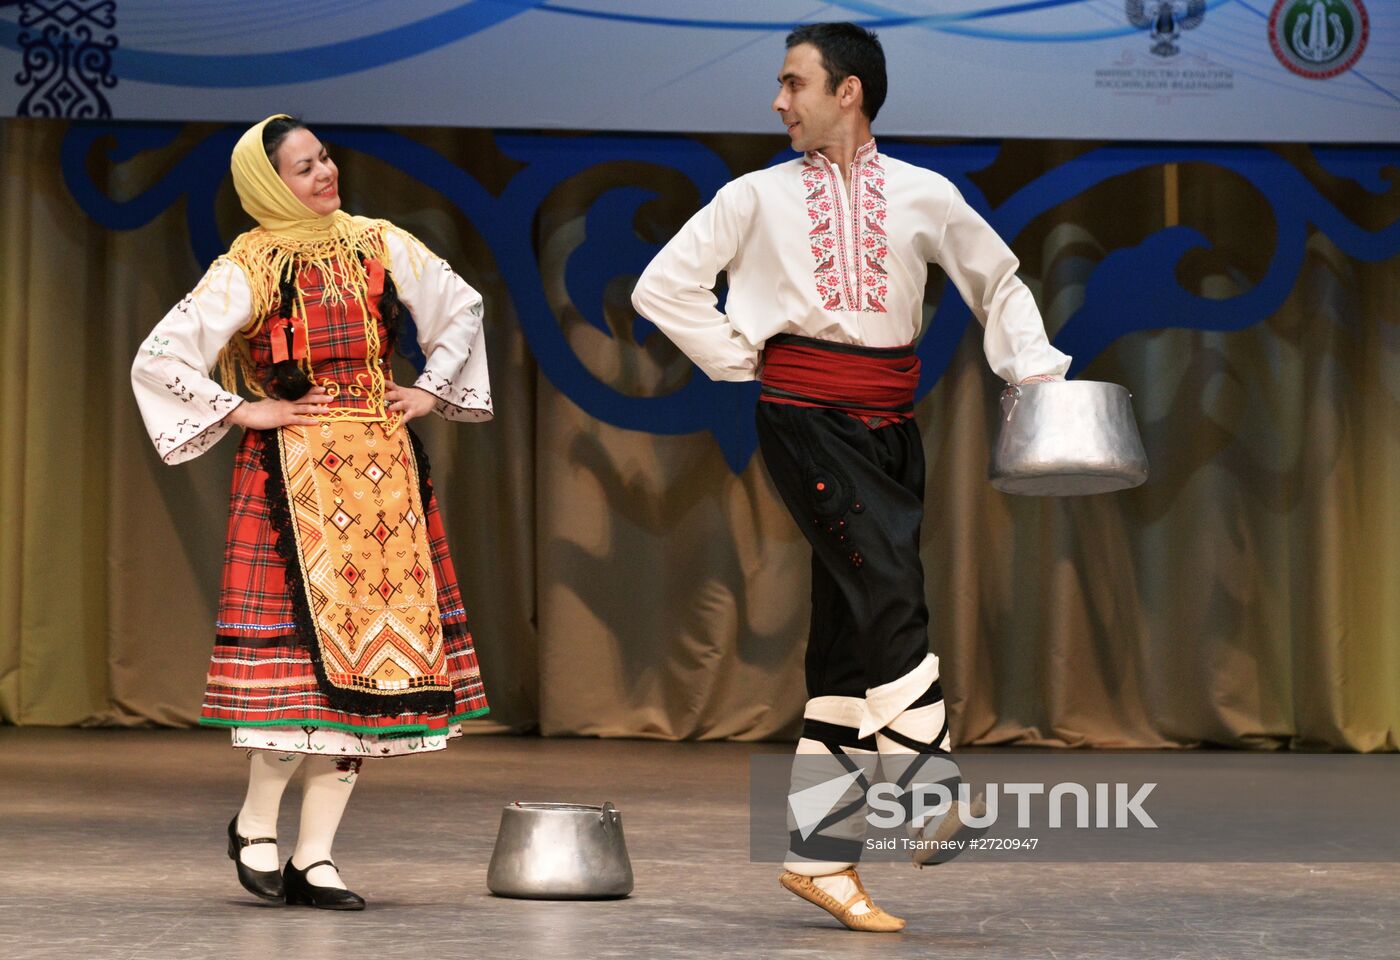 Makhmud Esambayev International Solo Dance Festival-Contest